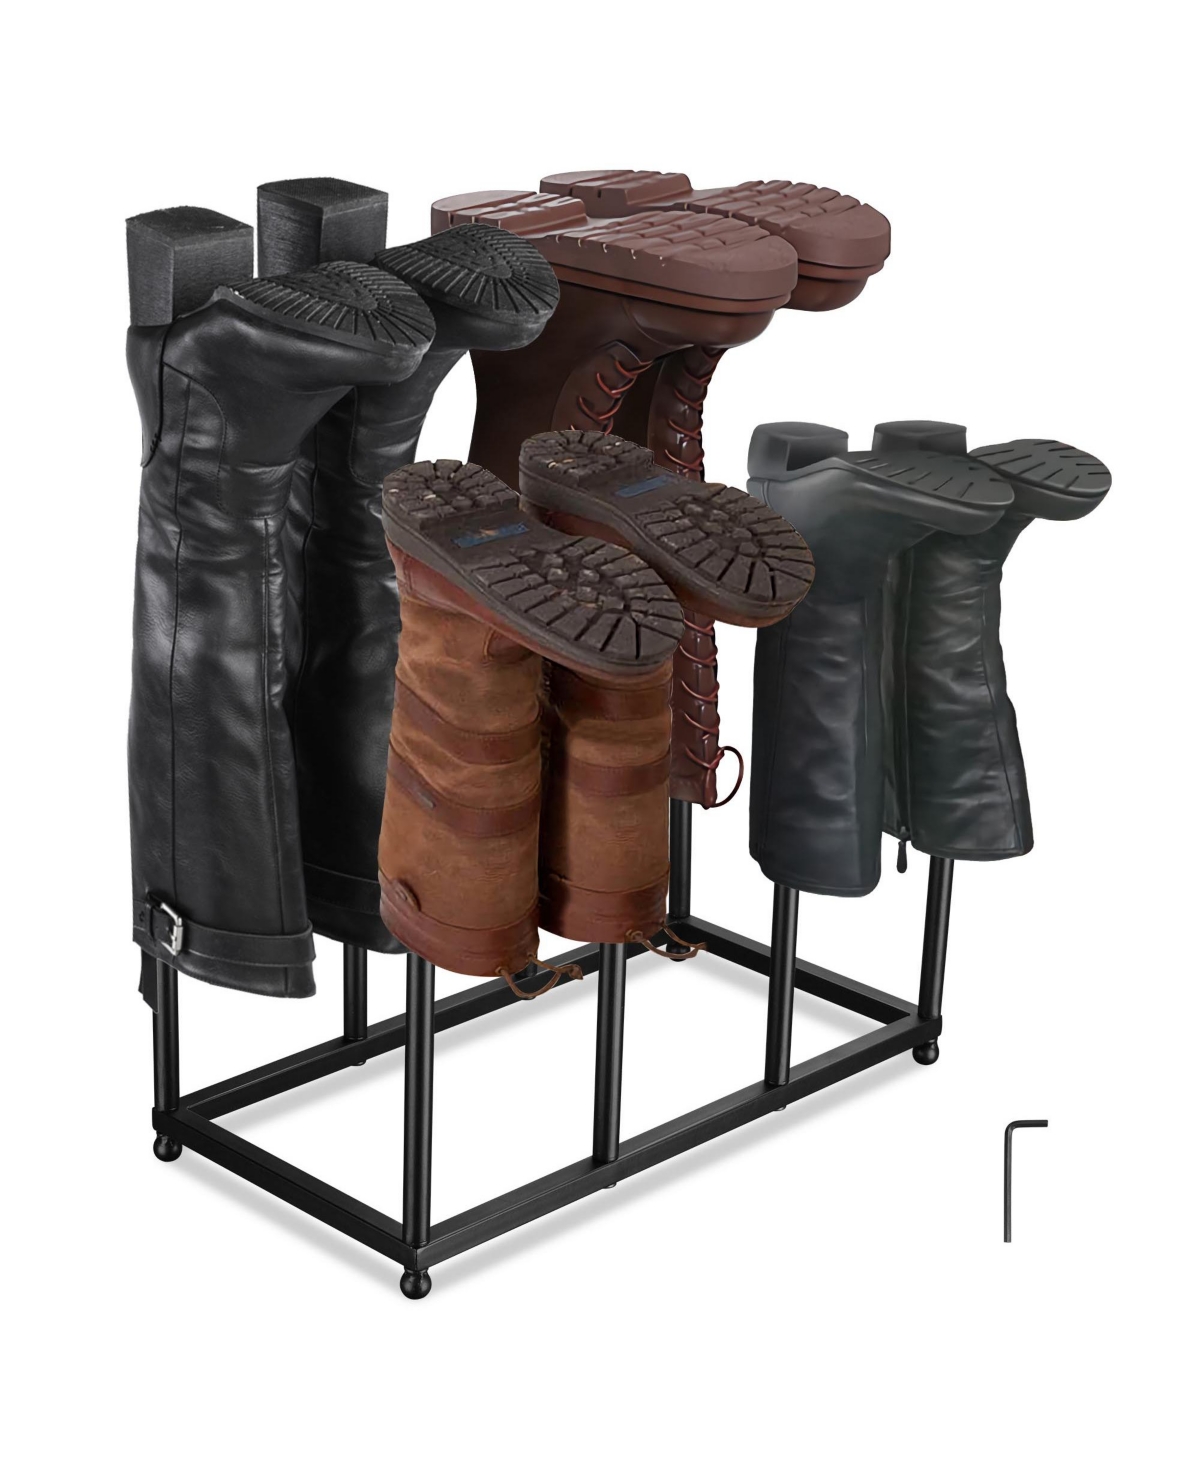 4 Pair Boot Rack Black Metal Free Standing Shoe Storage Organizer Closet Shelf Holds 4 Pairs for Tall Boot, Rain Boot, Knee-High Maintain Boot